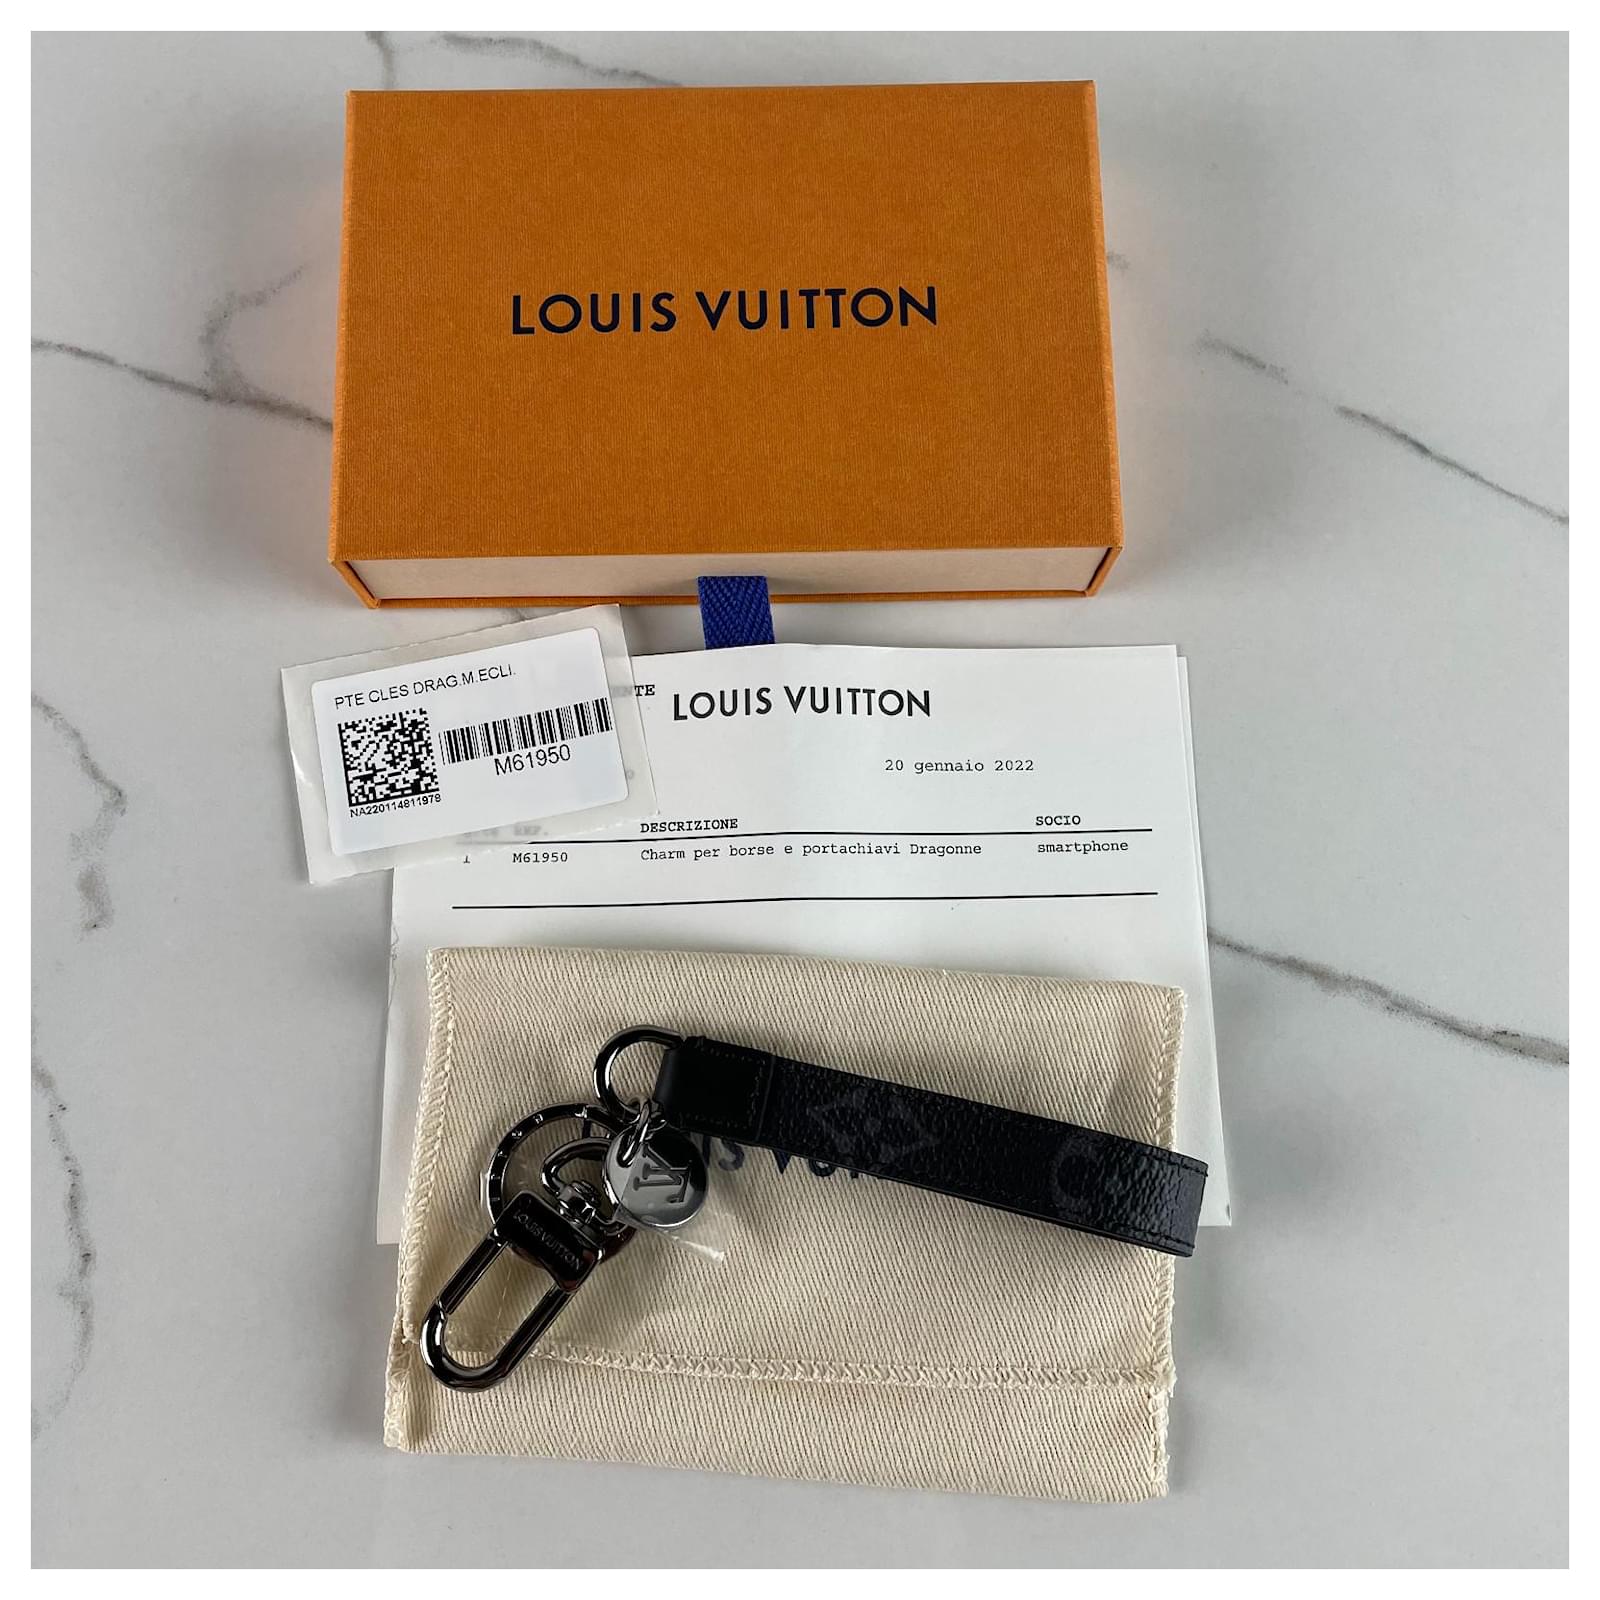 Louis Vuitton Jewel Bag and Wrist Strap Keyring